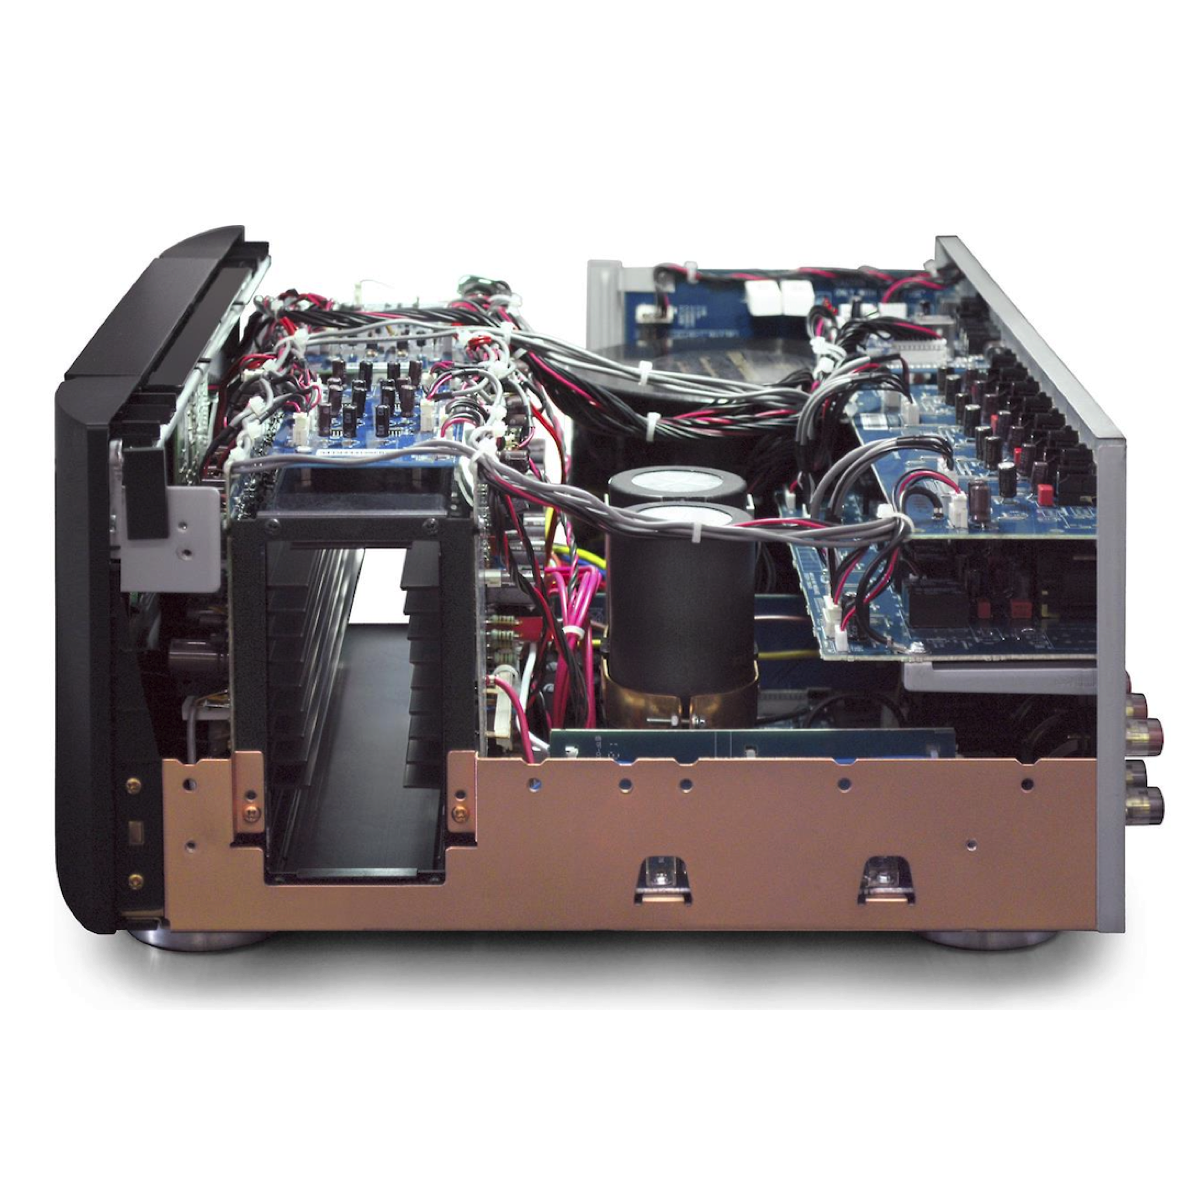 Marantz MM8077 - 7 Channel Power Amplifier - Auratech LLC